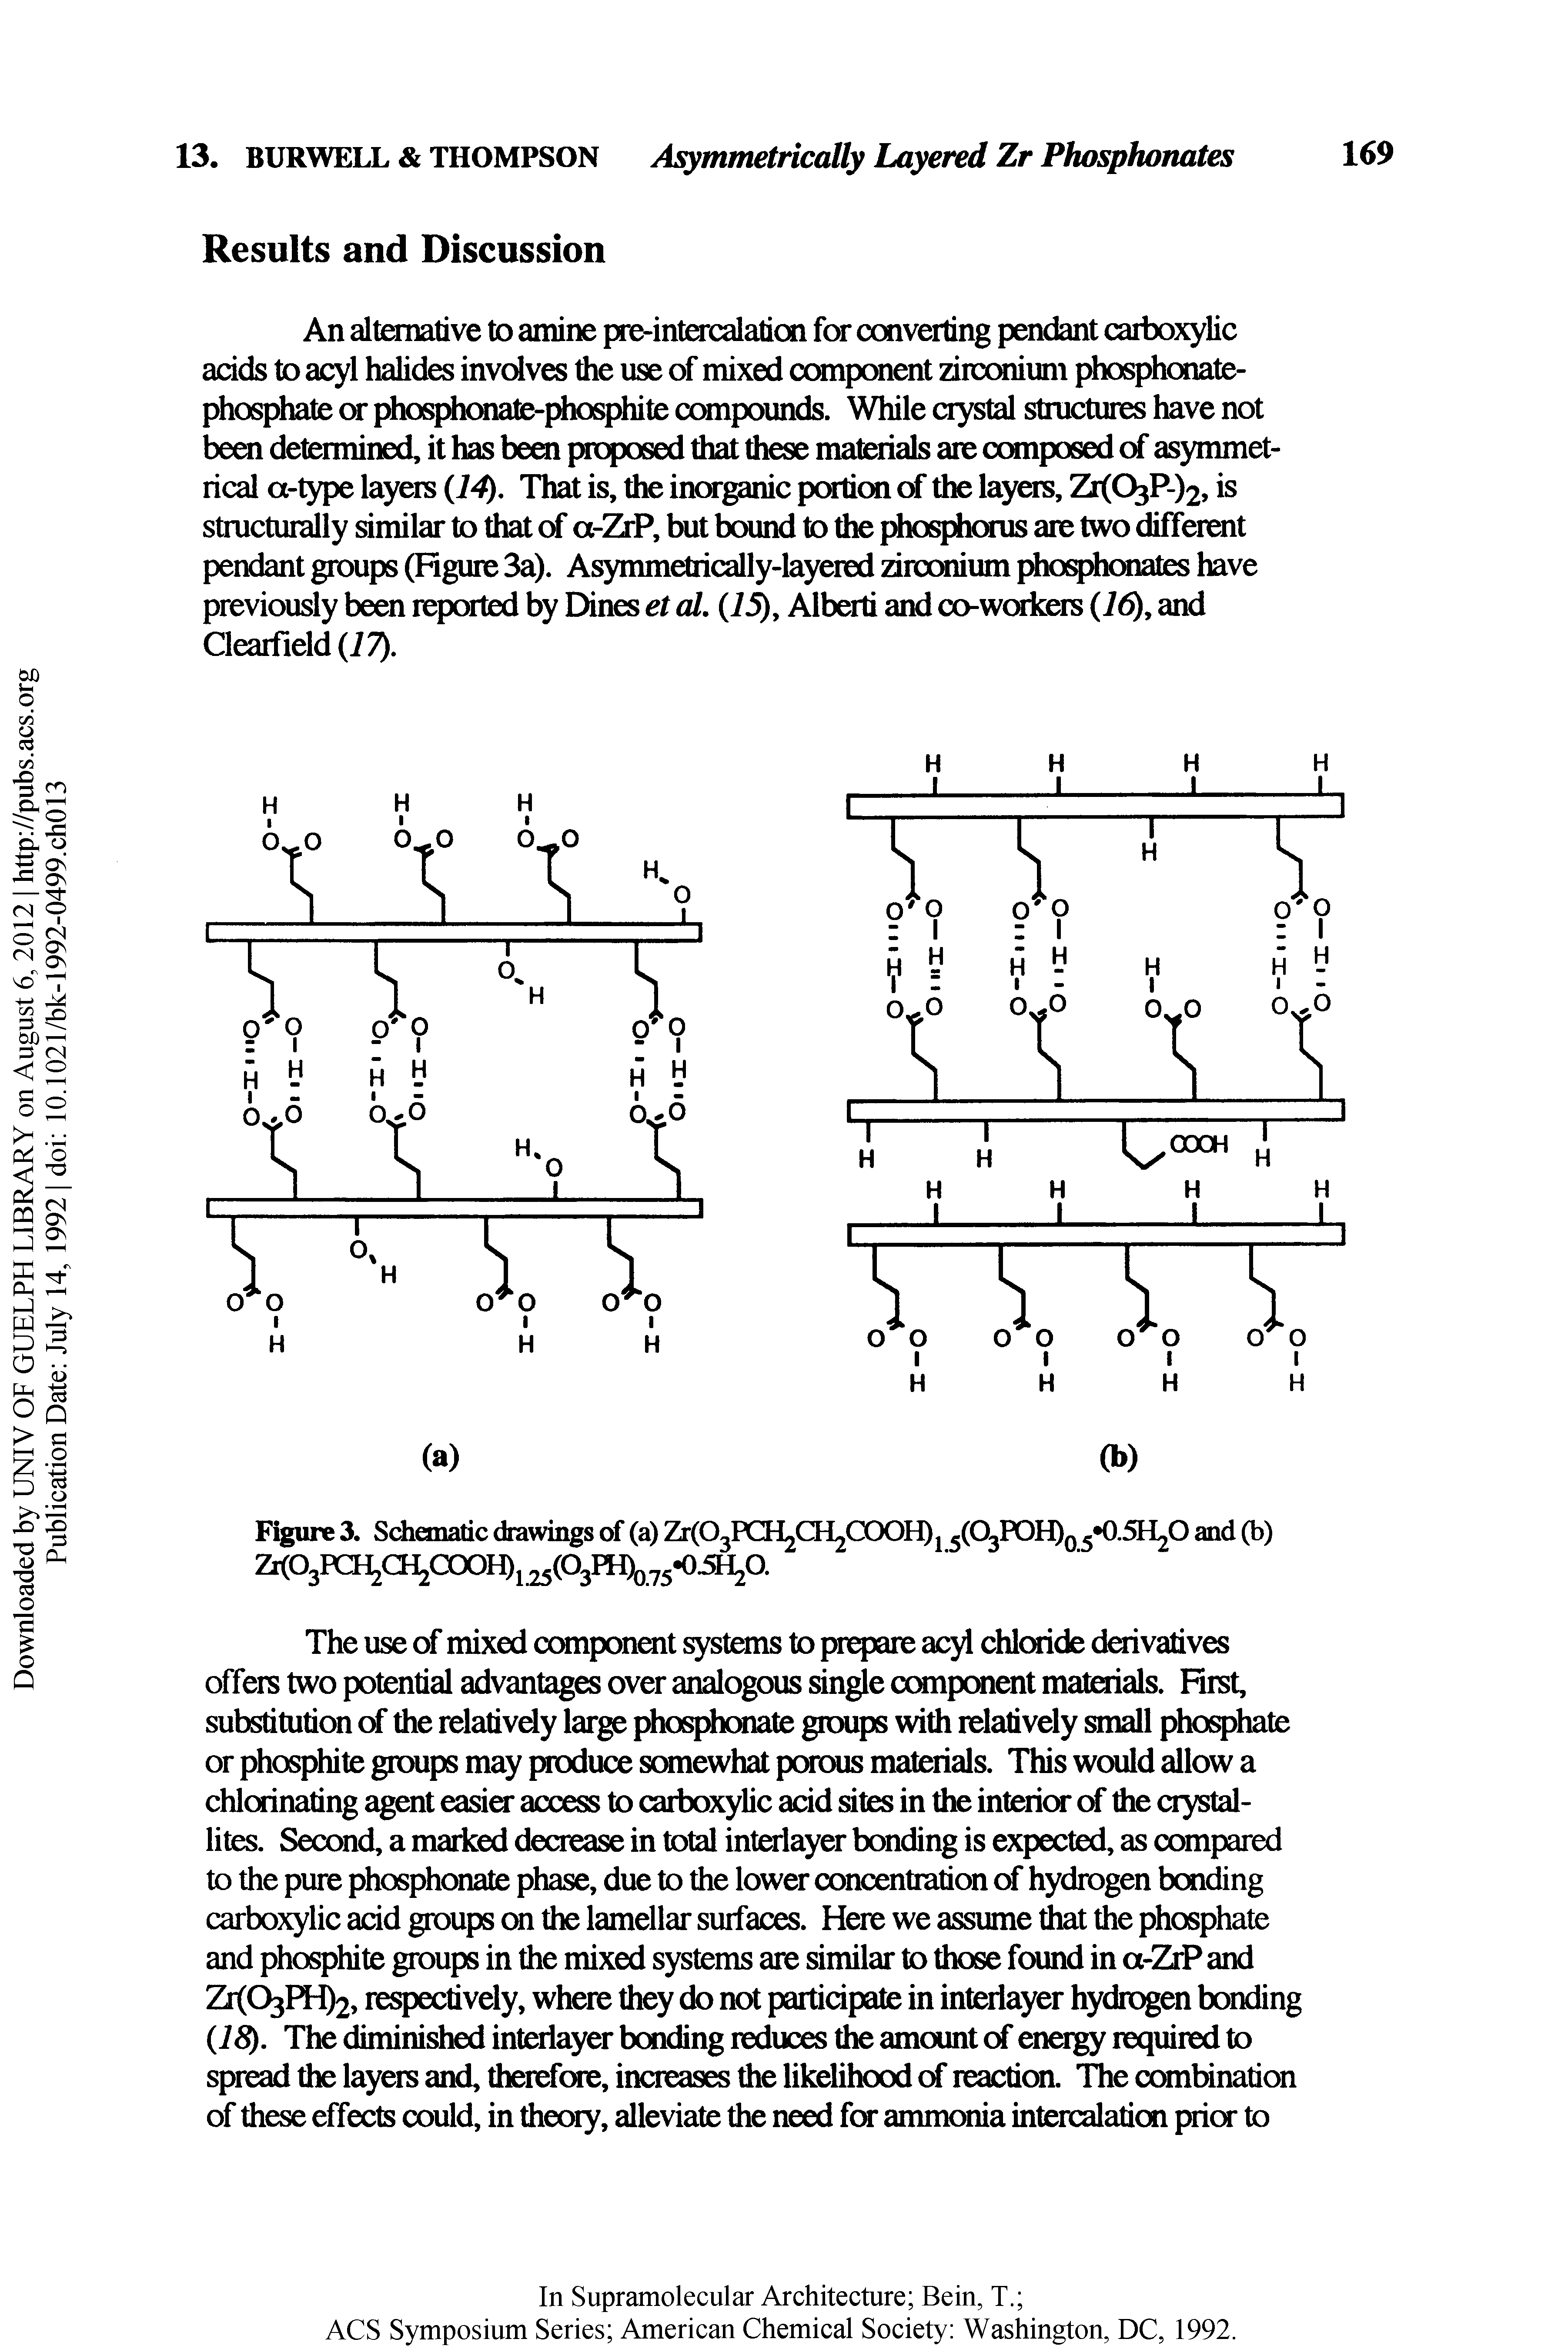 Figure 3. Schanadc drawings of (a) Zr(03PCH2CH2CC)0t j (03P0H)q 0.5H20 and (b) Zi<03Pa a cooH)j 25(O3PH) 75-05 a...